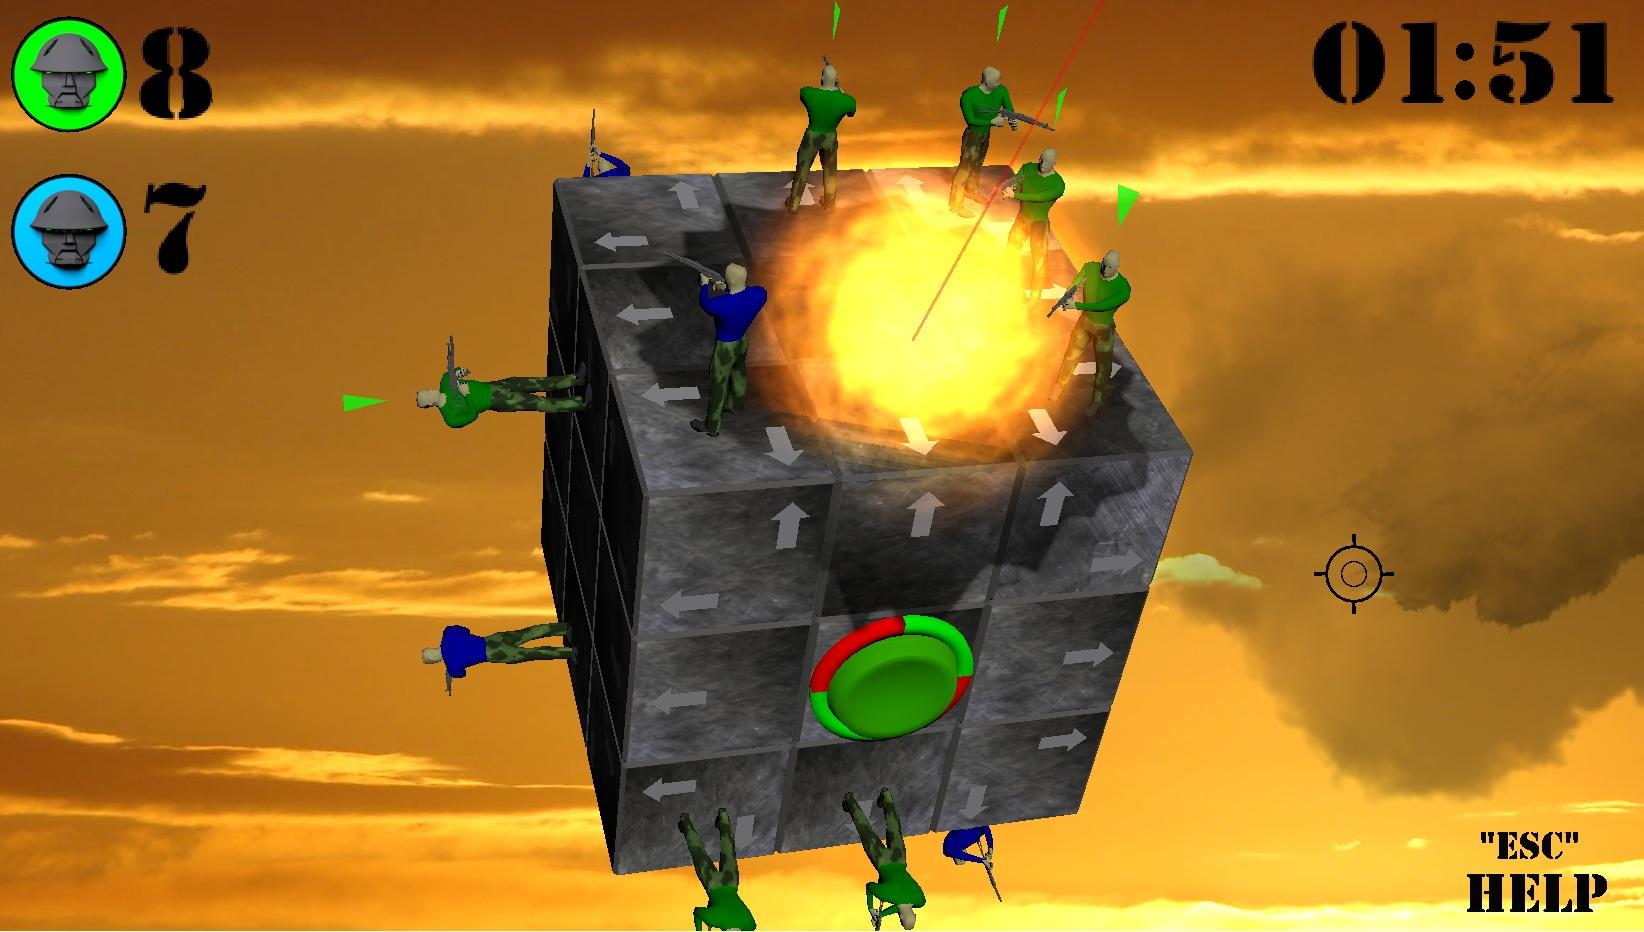 Screenshot №2 from game War Cube